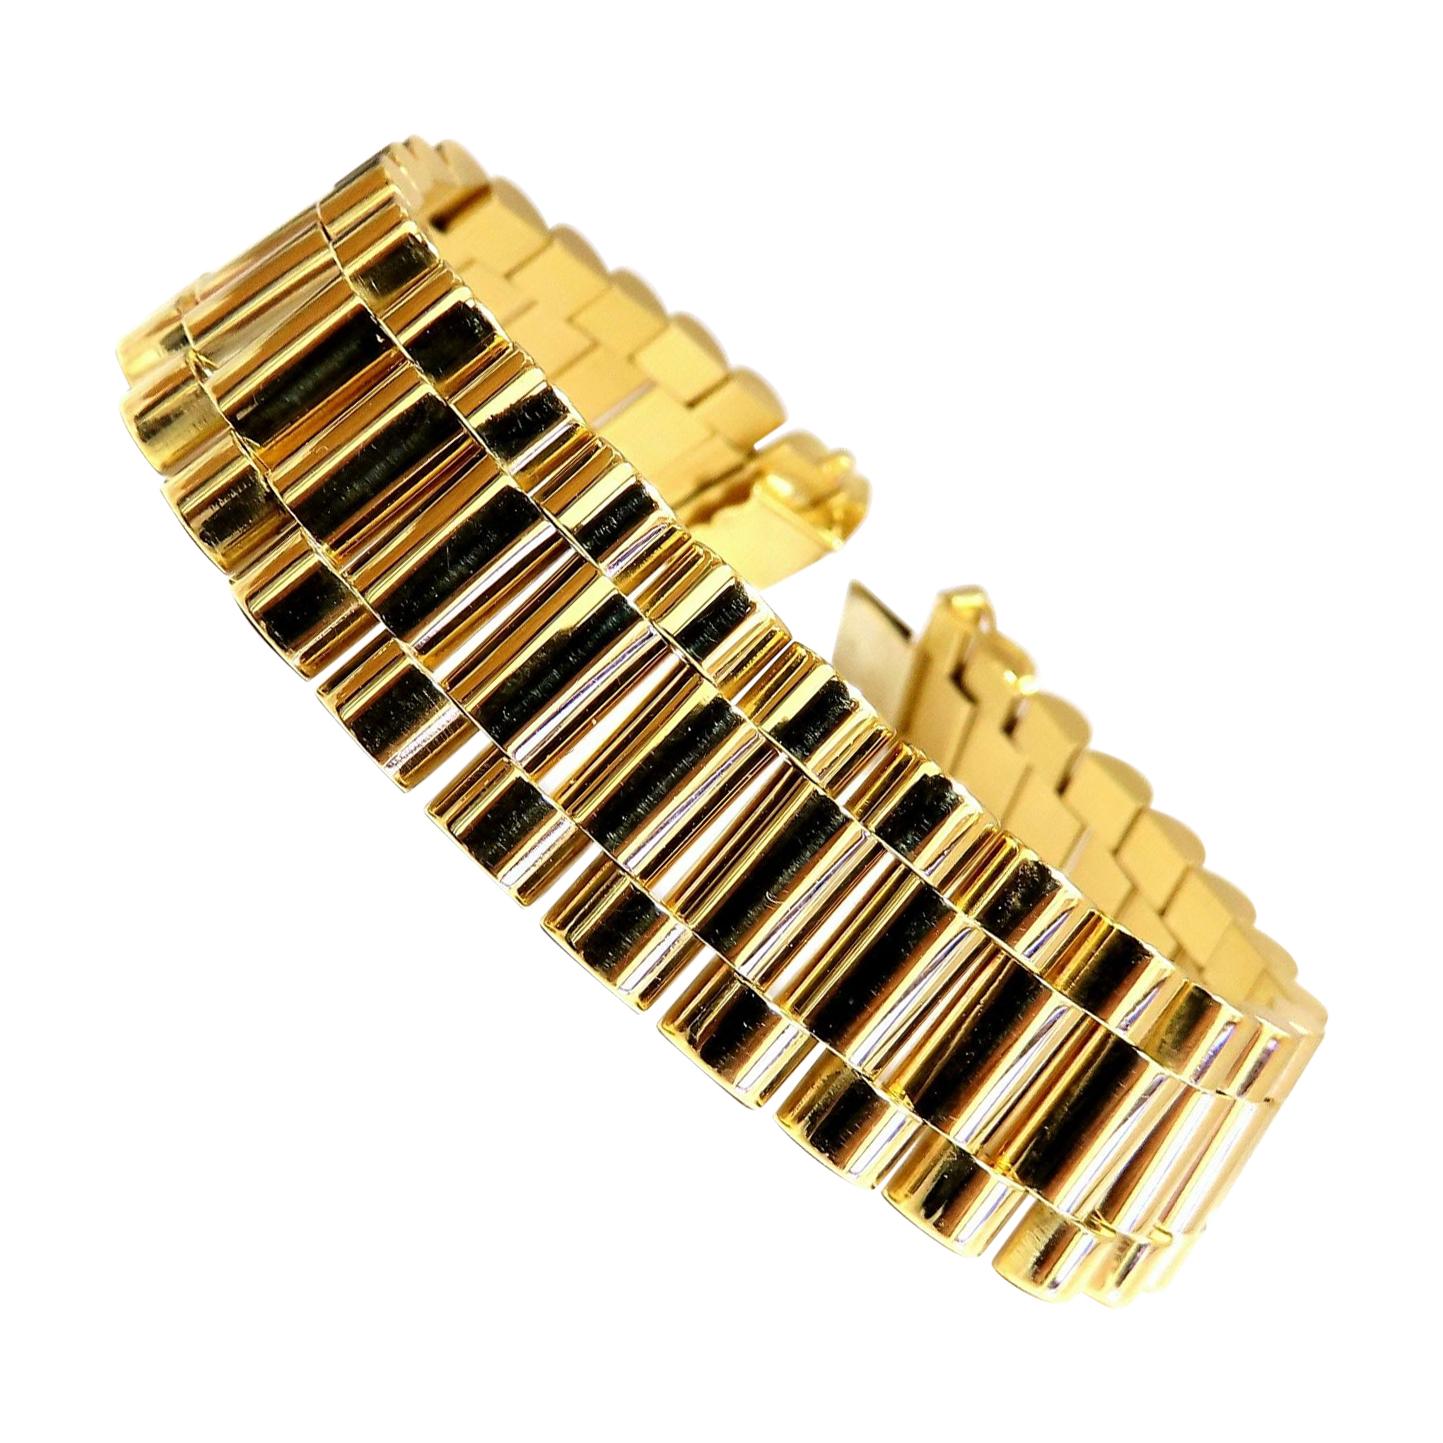 The Many Popular Rolex Bracelets - Watch Repair & Co.